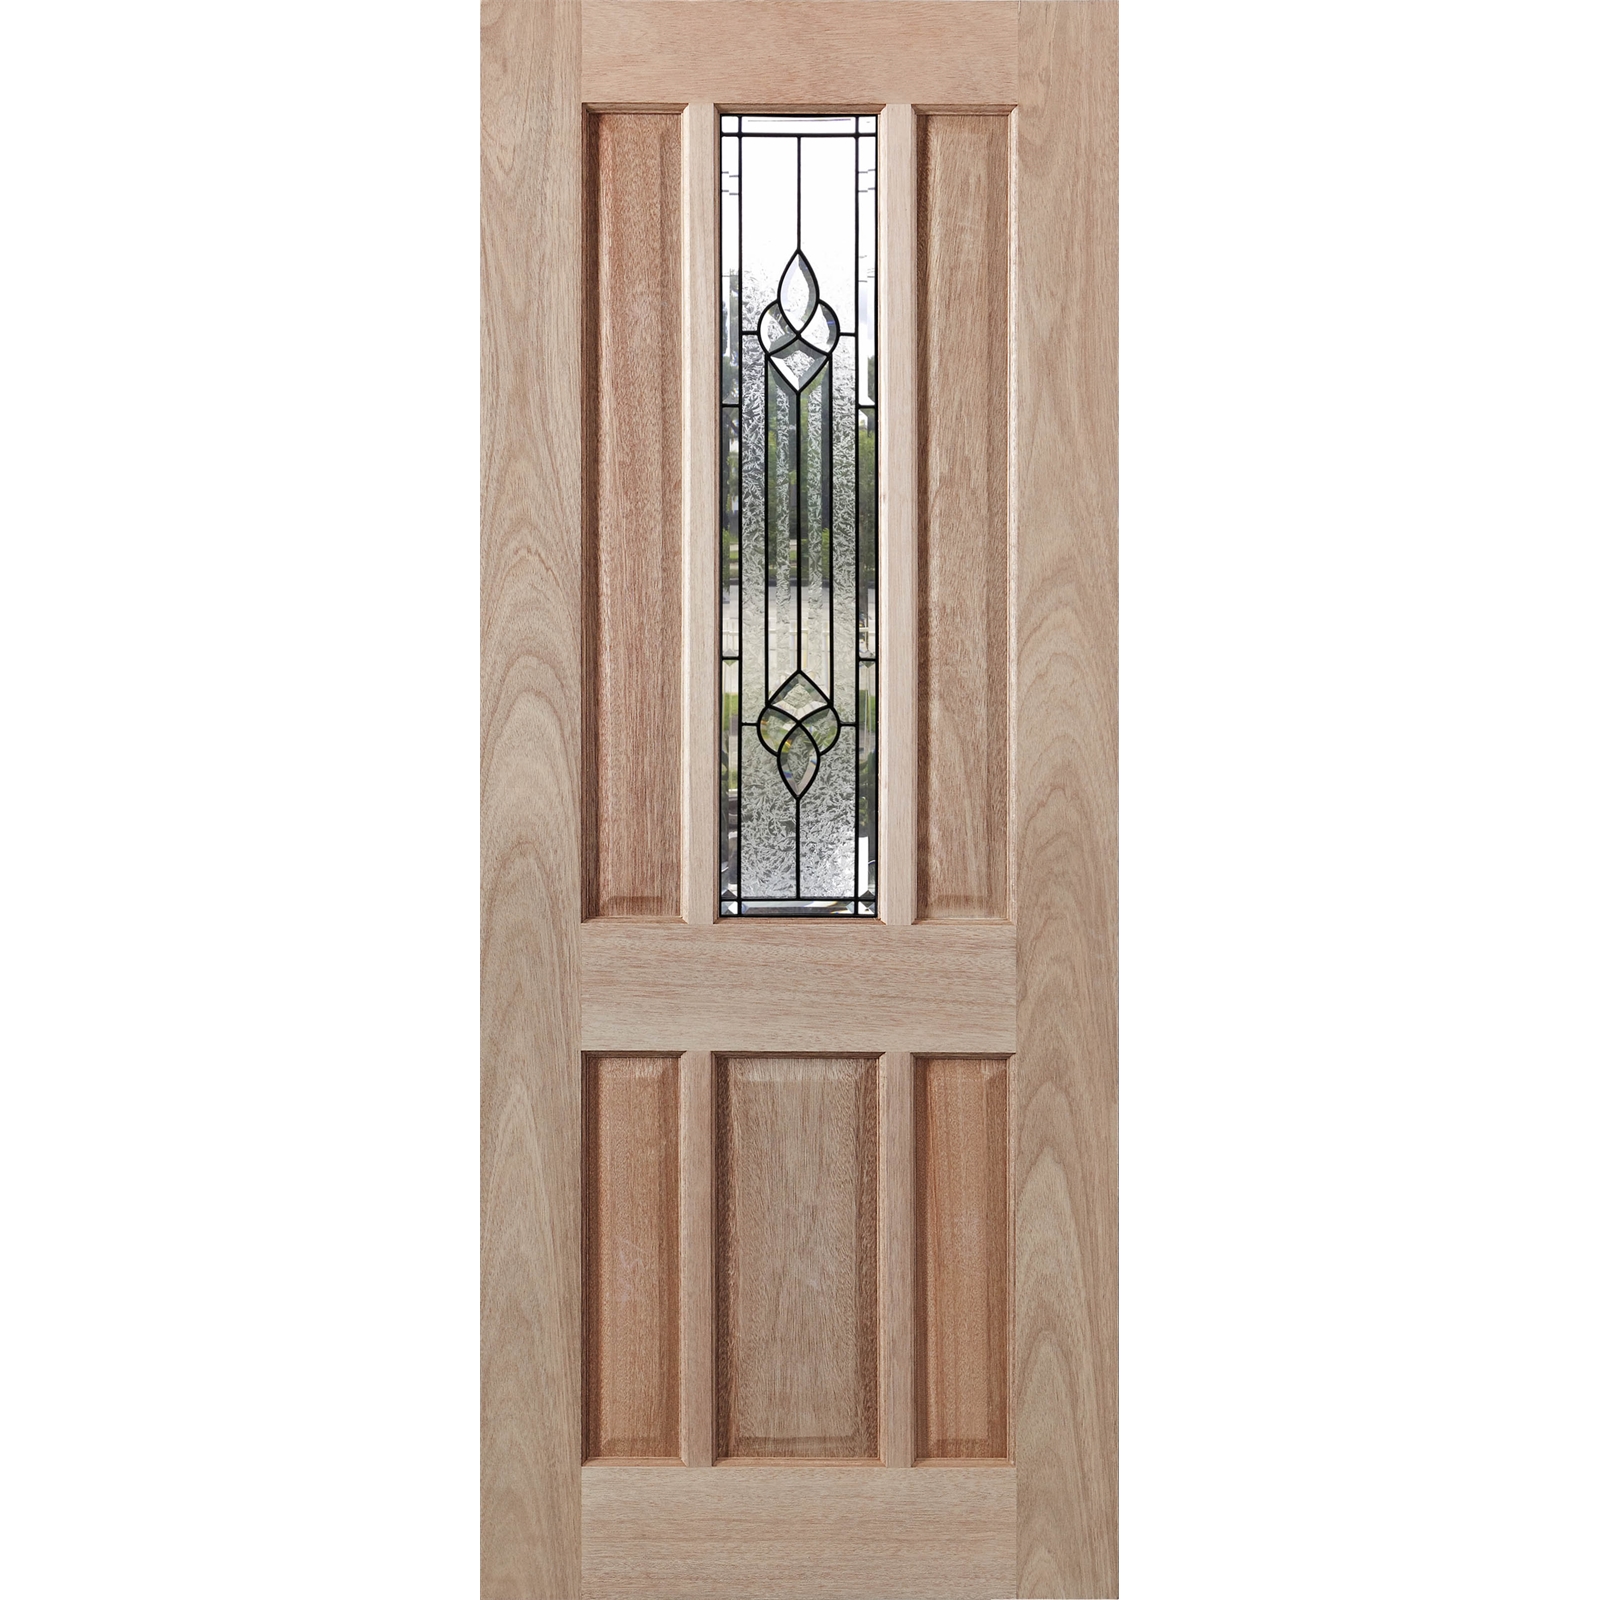 Woodcraft Doors 2040 x 820 x 40mm Long Bevelled Glass Hamlett Entrance Door